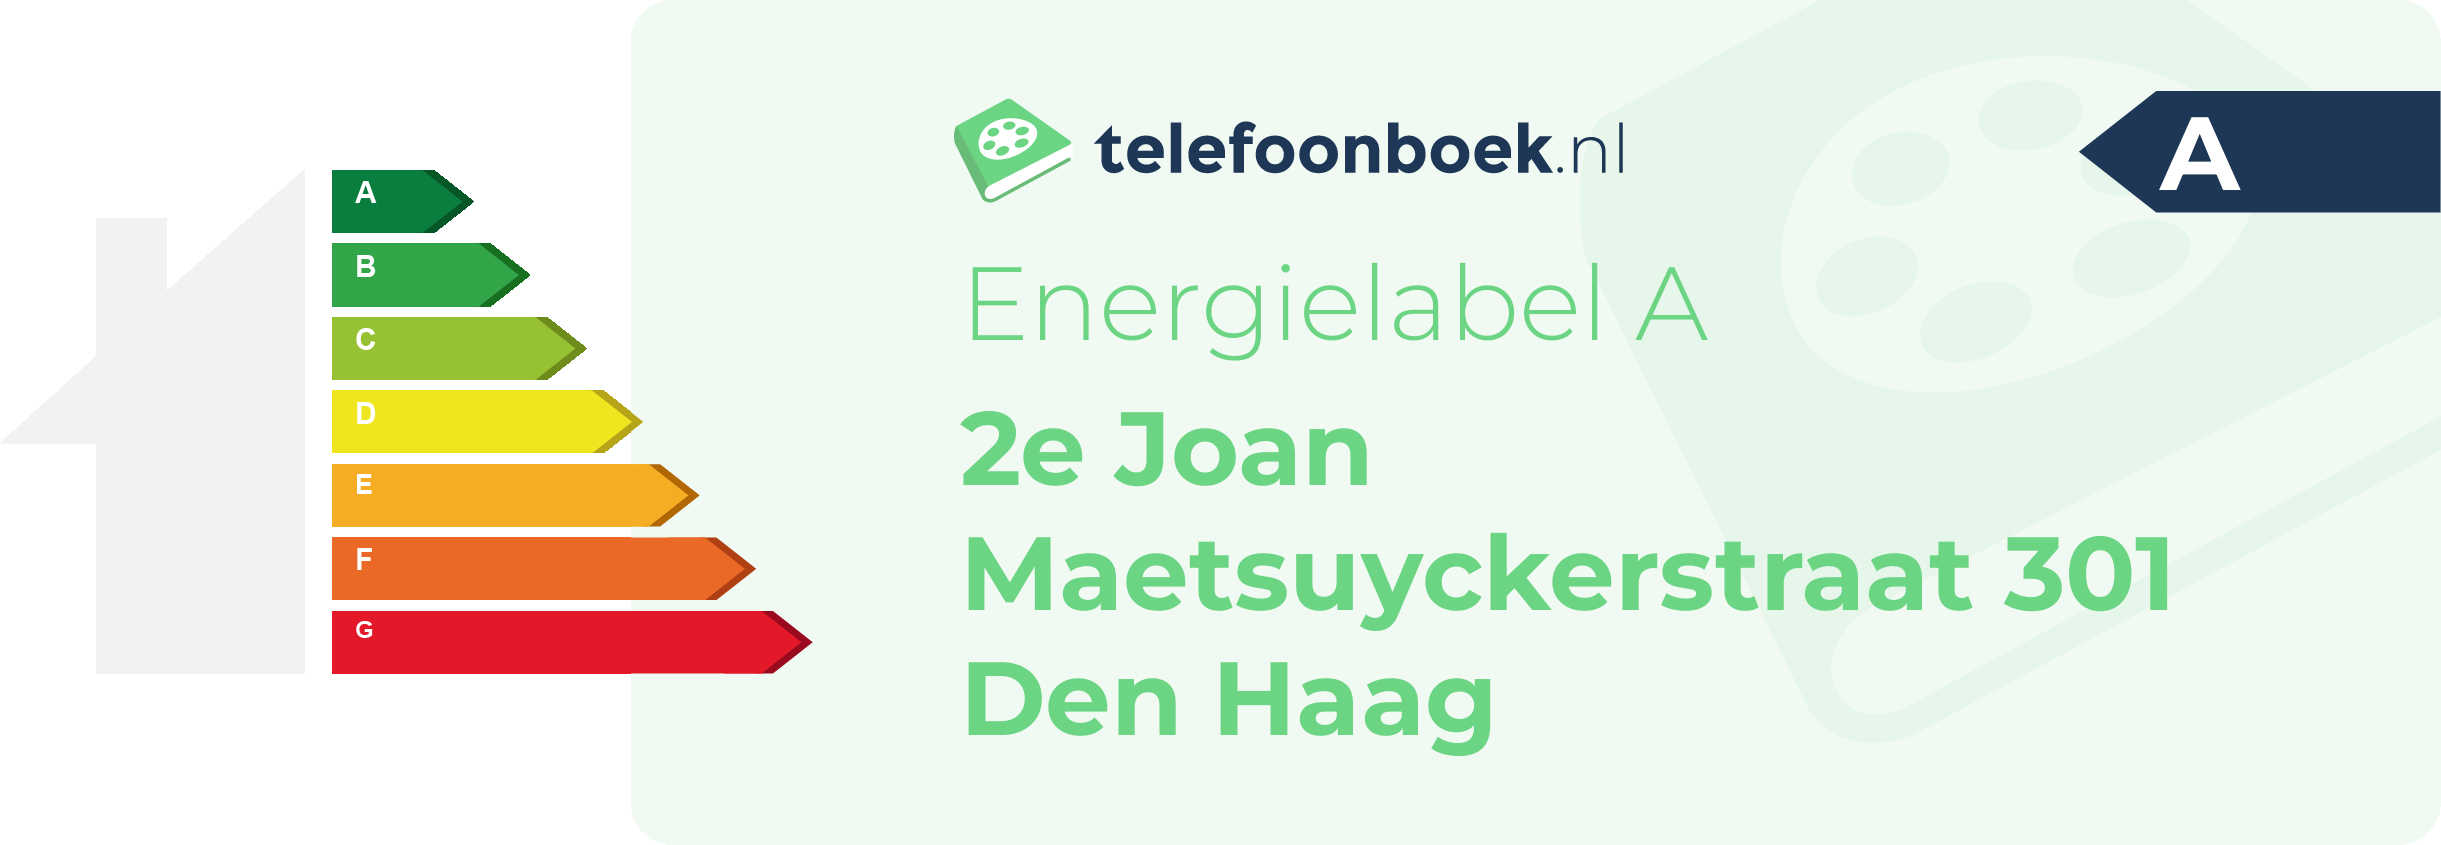 Energielabel 2e Joan Maetsuyckerstraat 301 Den Haag